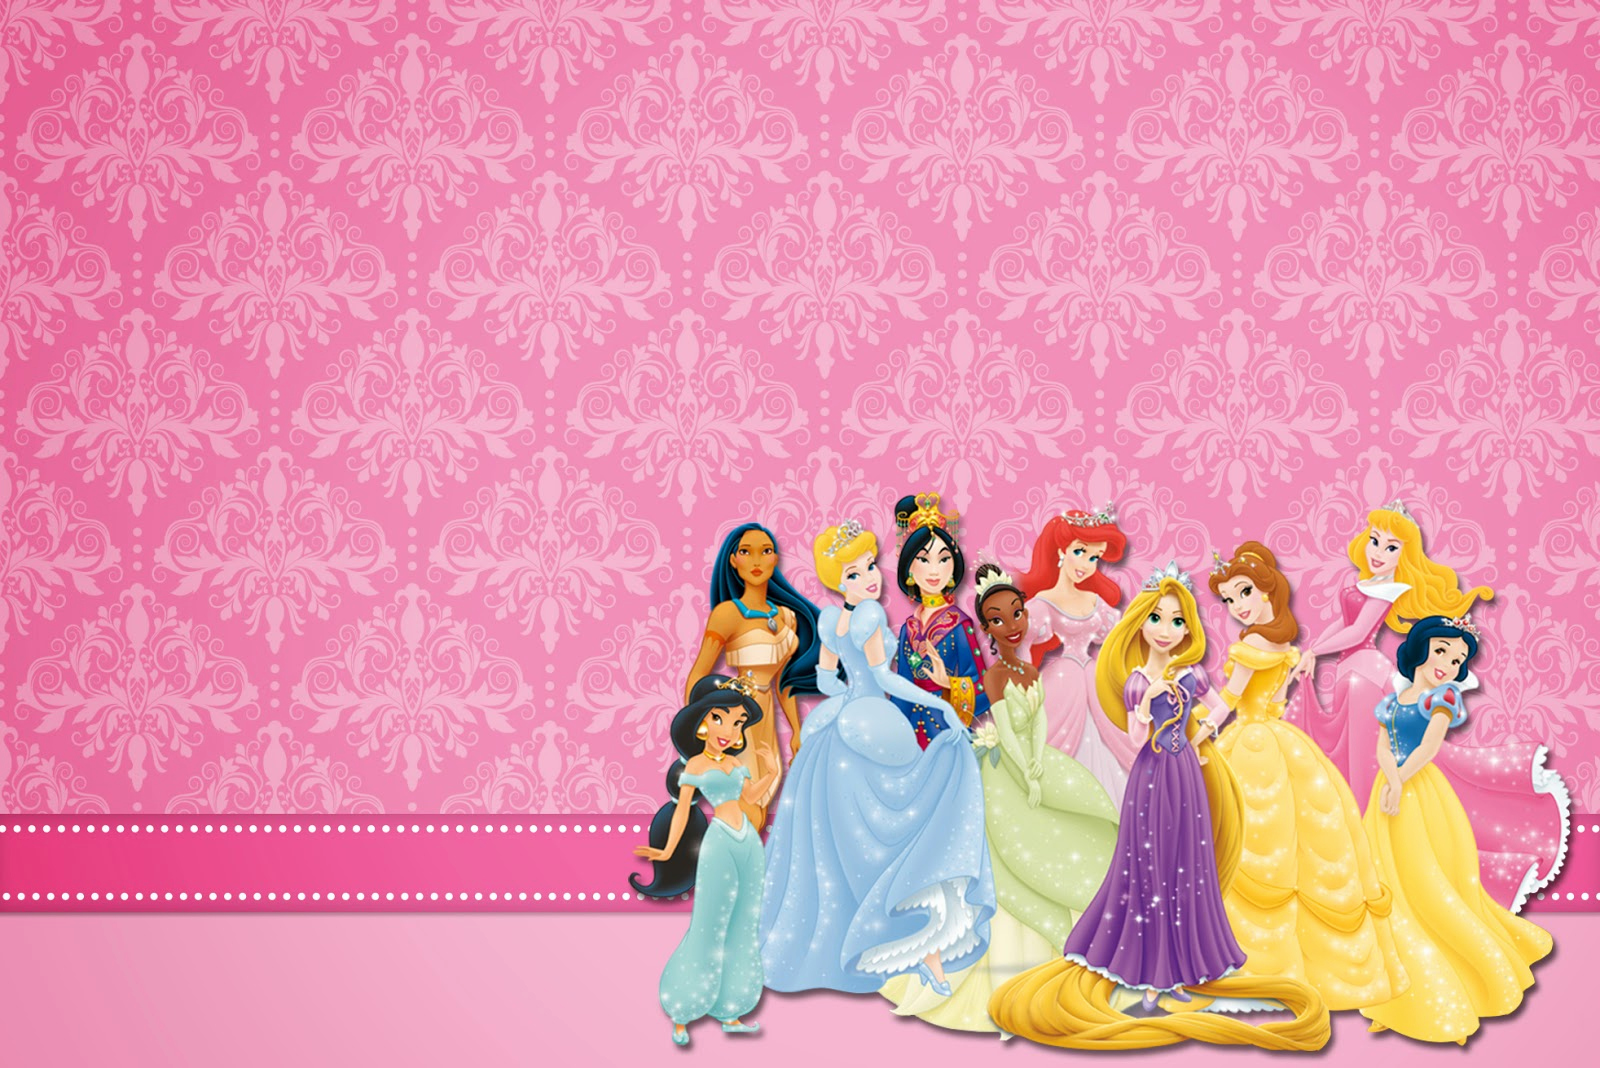 Free Disney Princess Invitation Template Luxury Disney Princess Party Free Printable Party Invitations